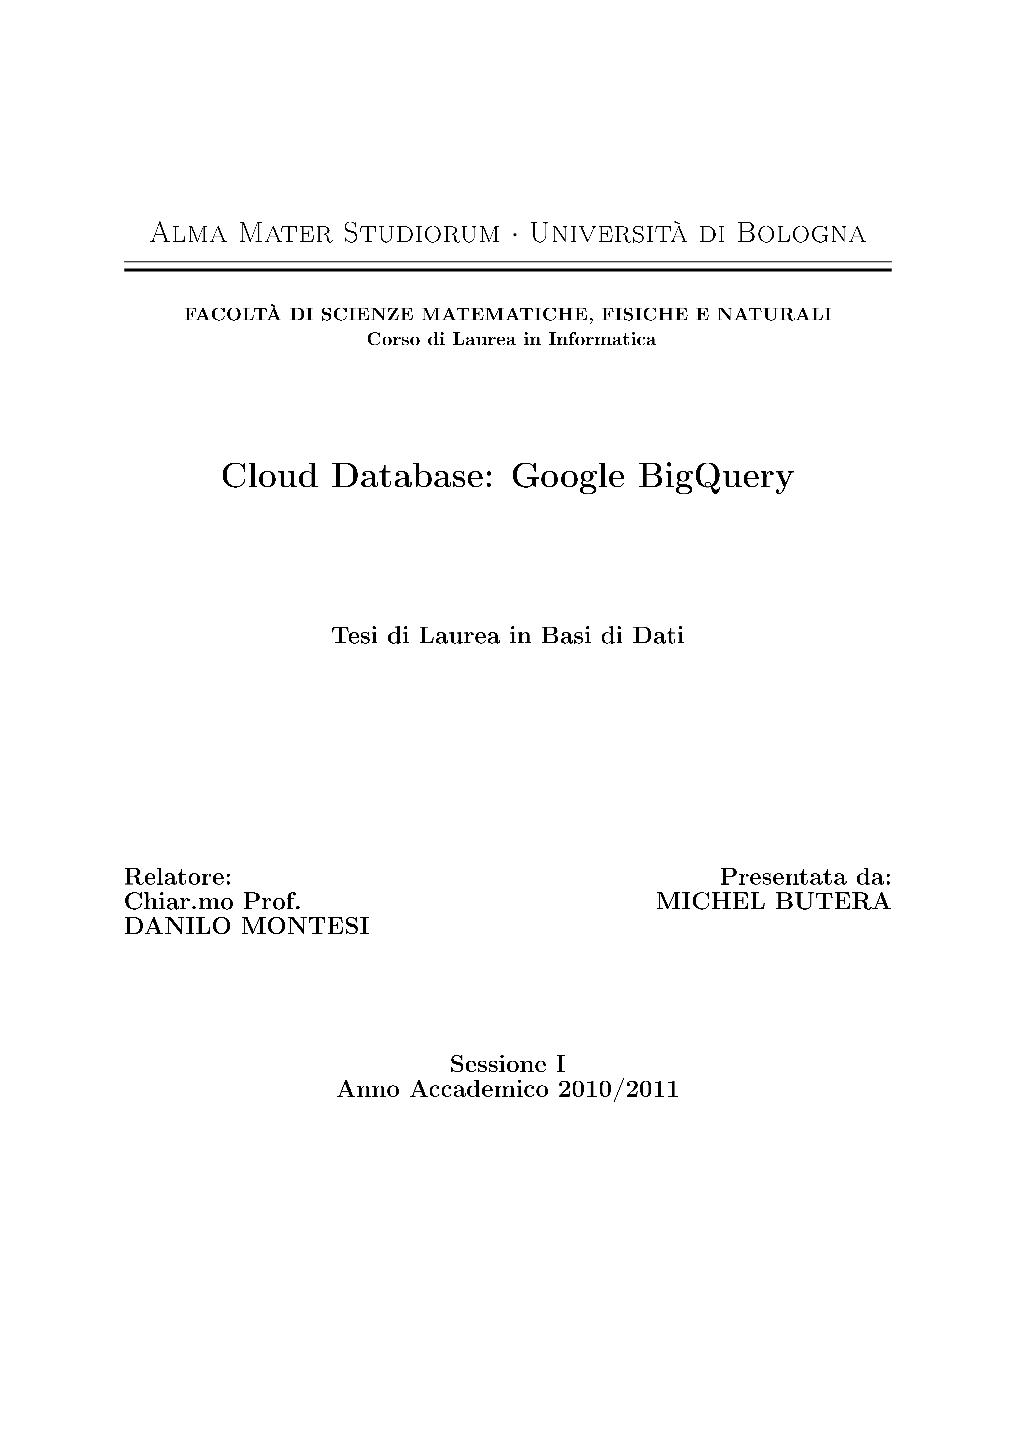 Cloud Database: Google Bigquery